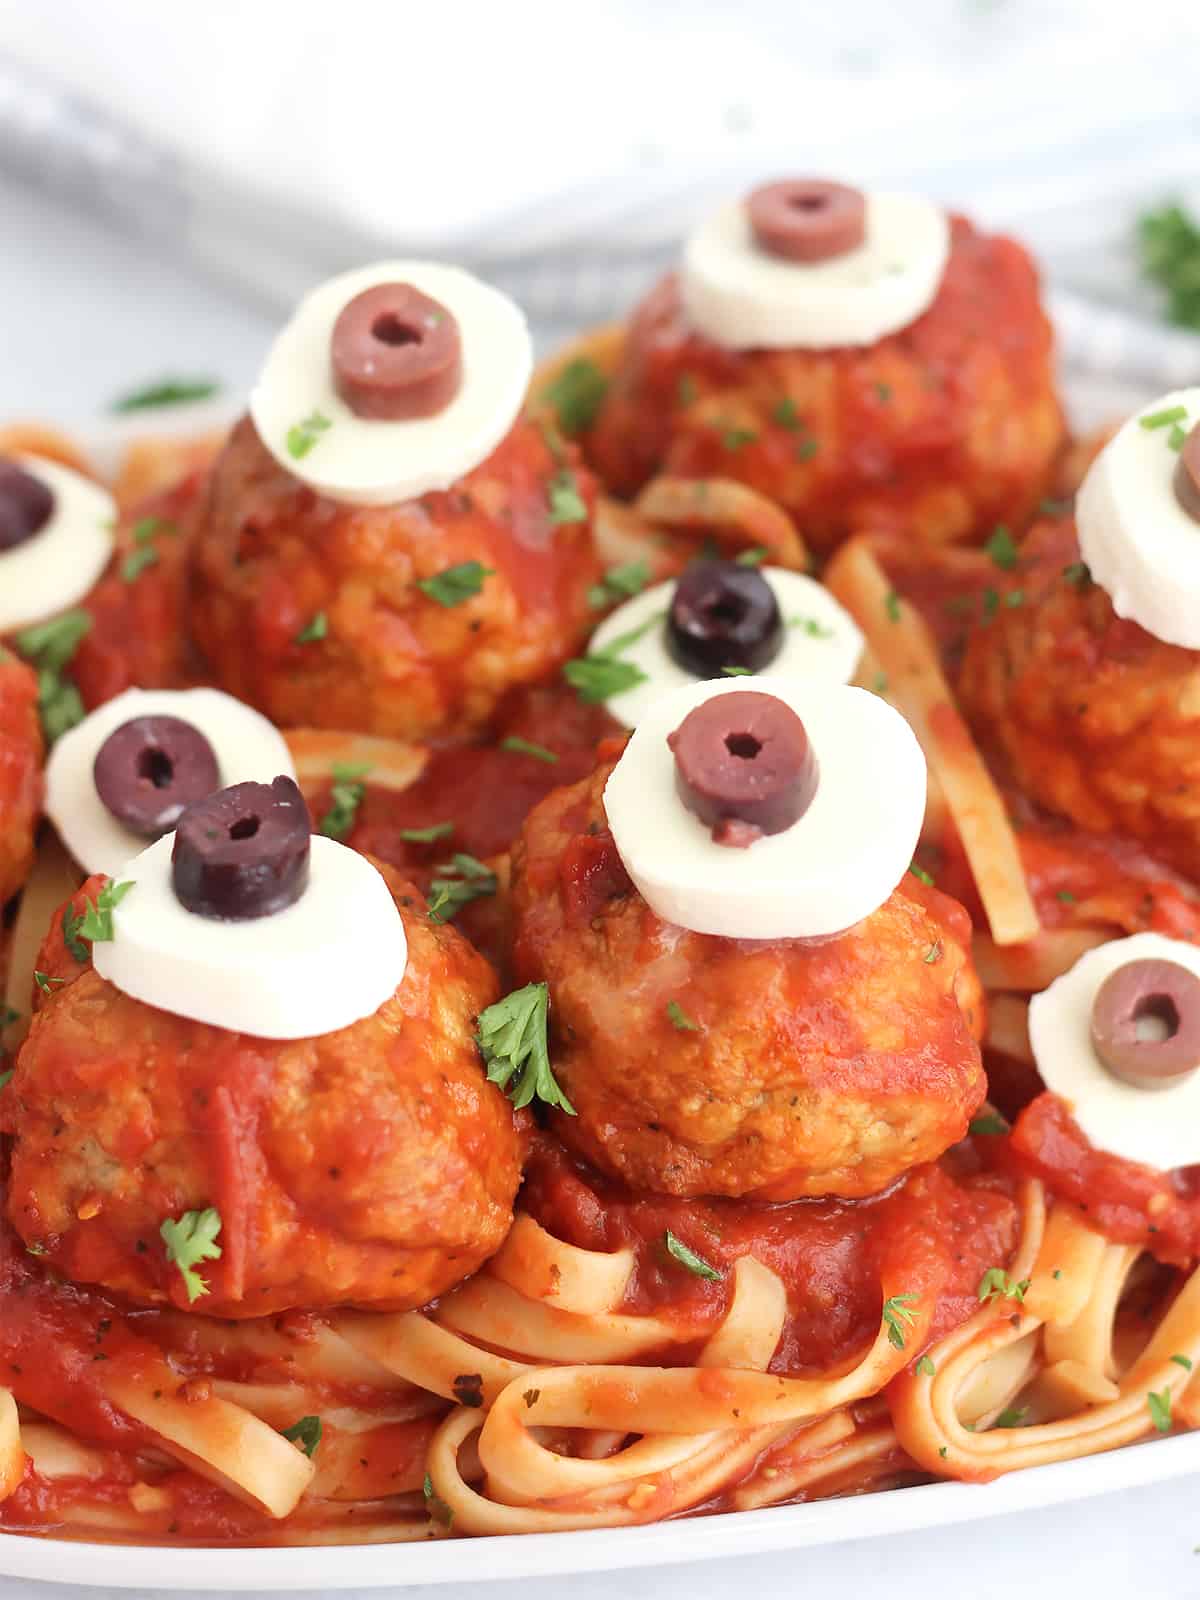 Creepy pasta meatballs garnished with fresh parsley.